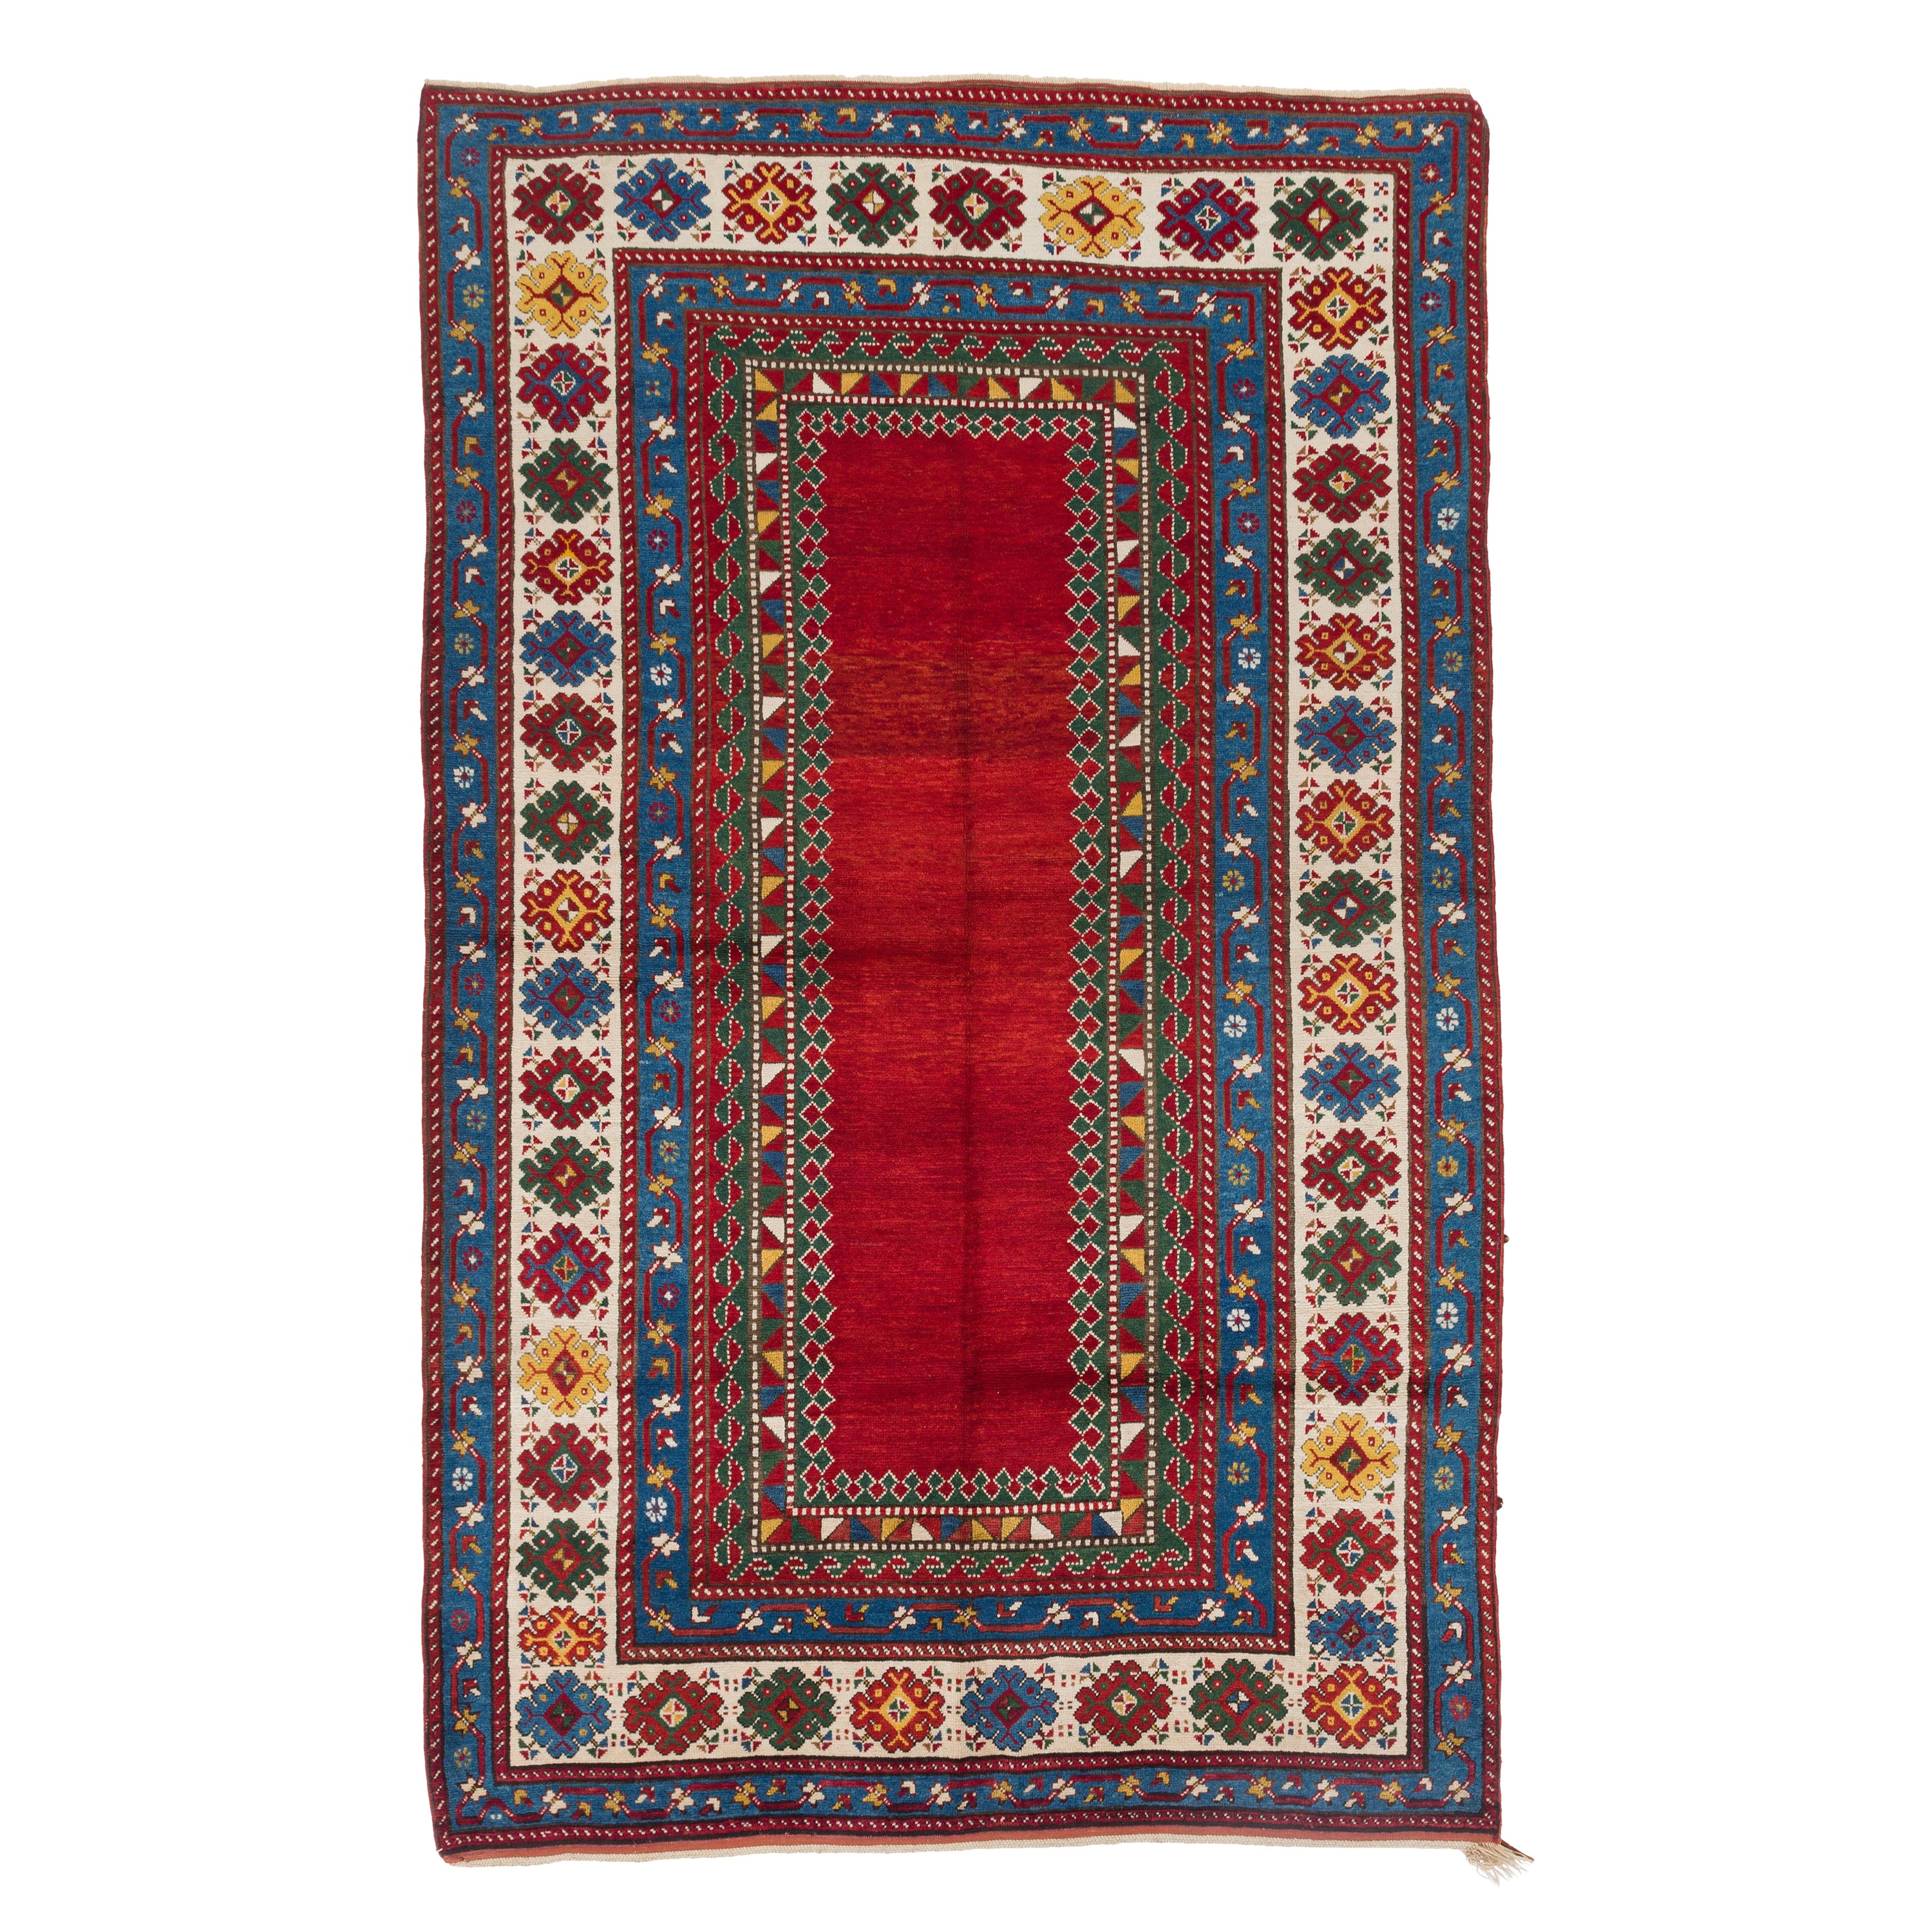 5.9x9.3 ft Antique Caucasian Kazak Rug, Circa 1880, 100% Wool and Natural Dyes